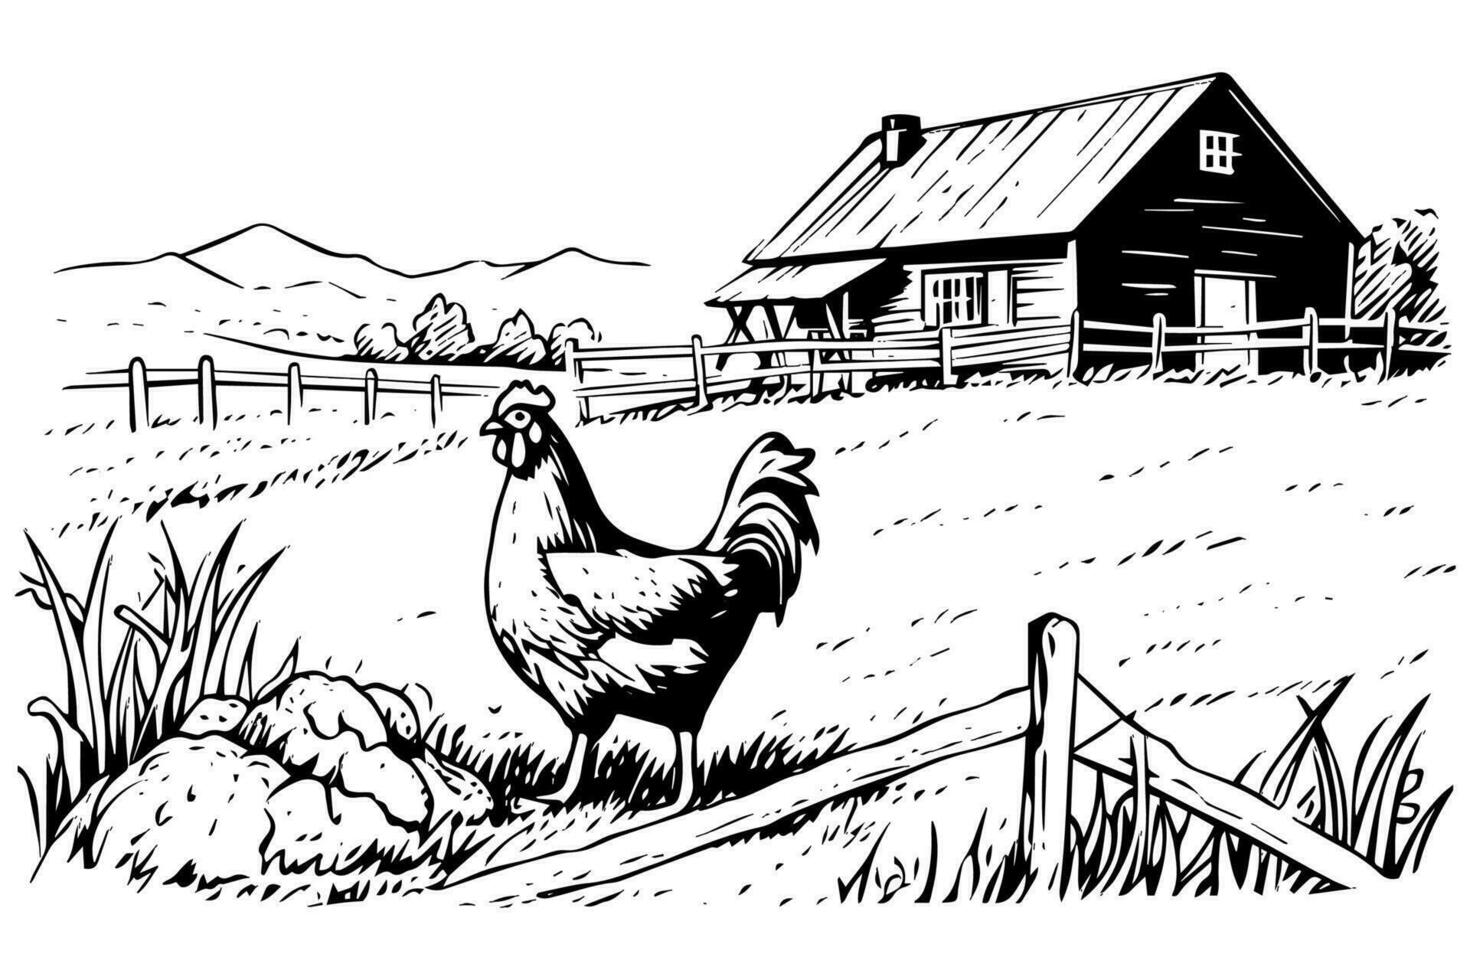 Chickens in farm  sketch. Rural landscape in vintage engraving style vector illustration.